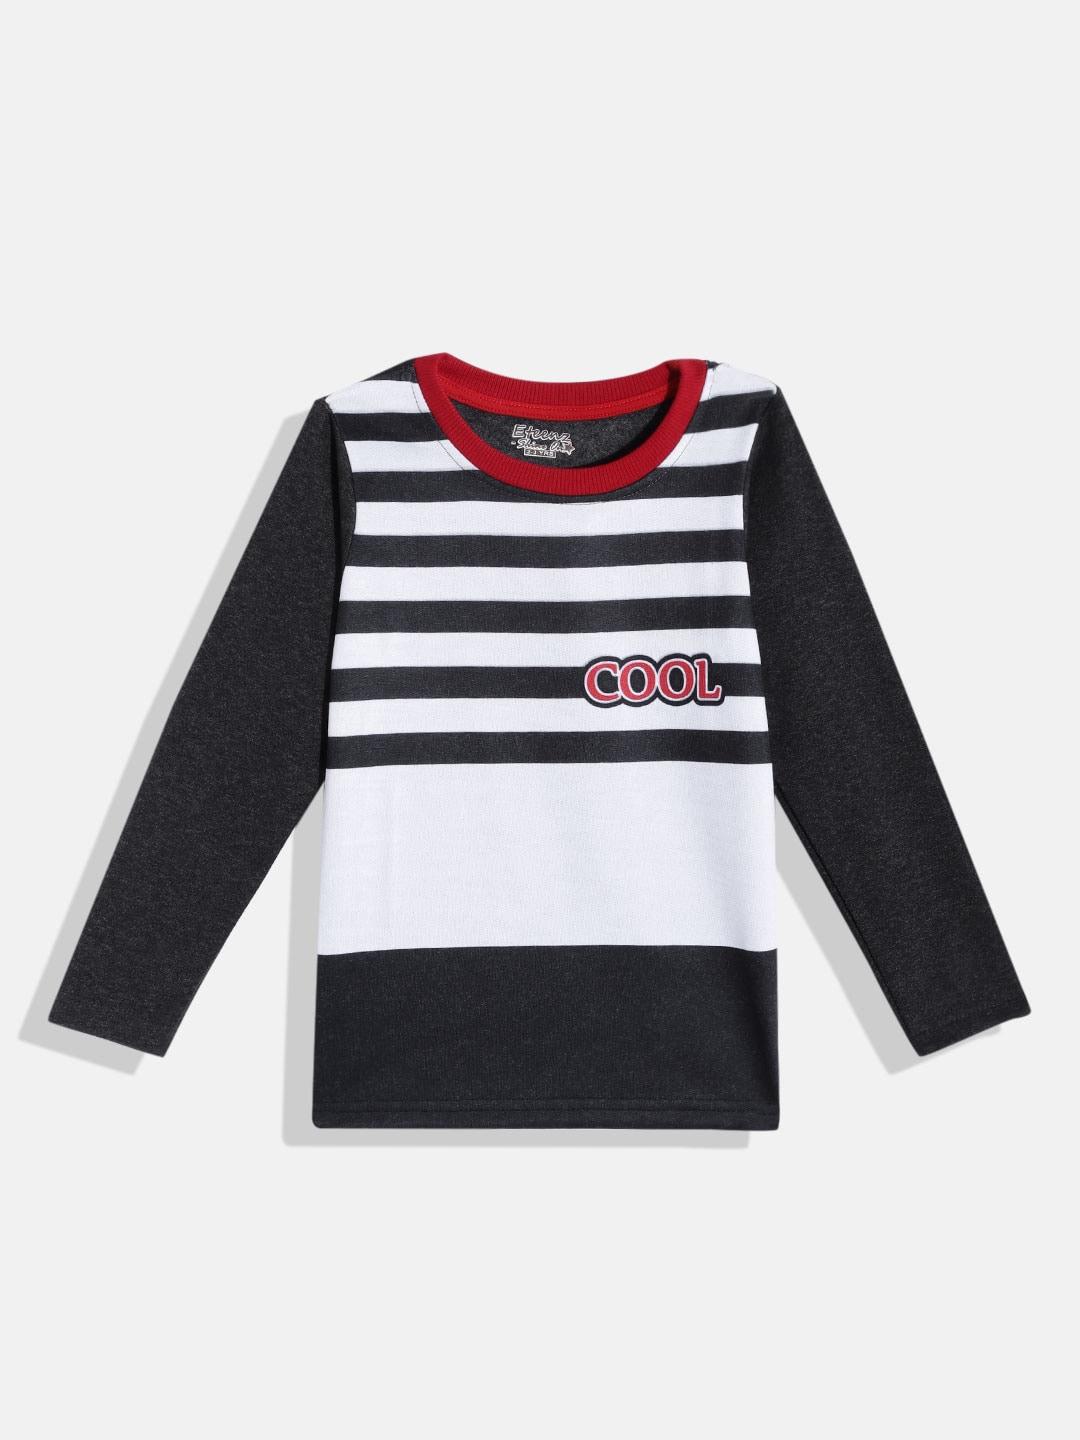 Eteenz Boys Charcoal Black Striped Sweatshirt